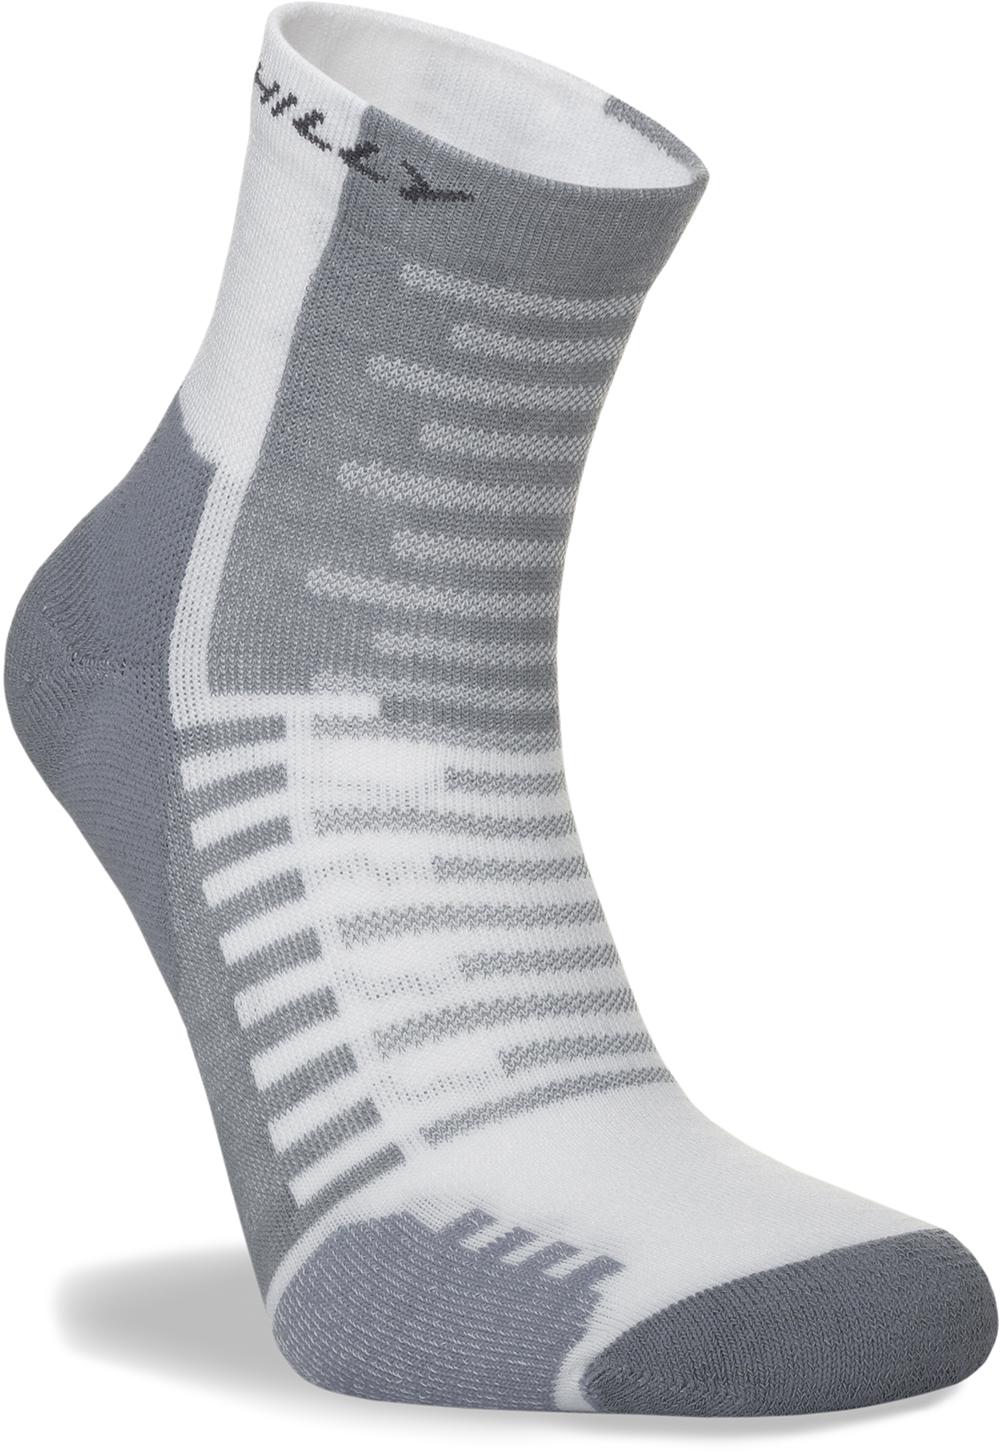 Hilly Active Anklet Minimum Cushioning - White/grey